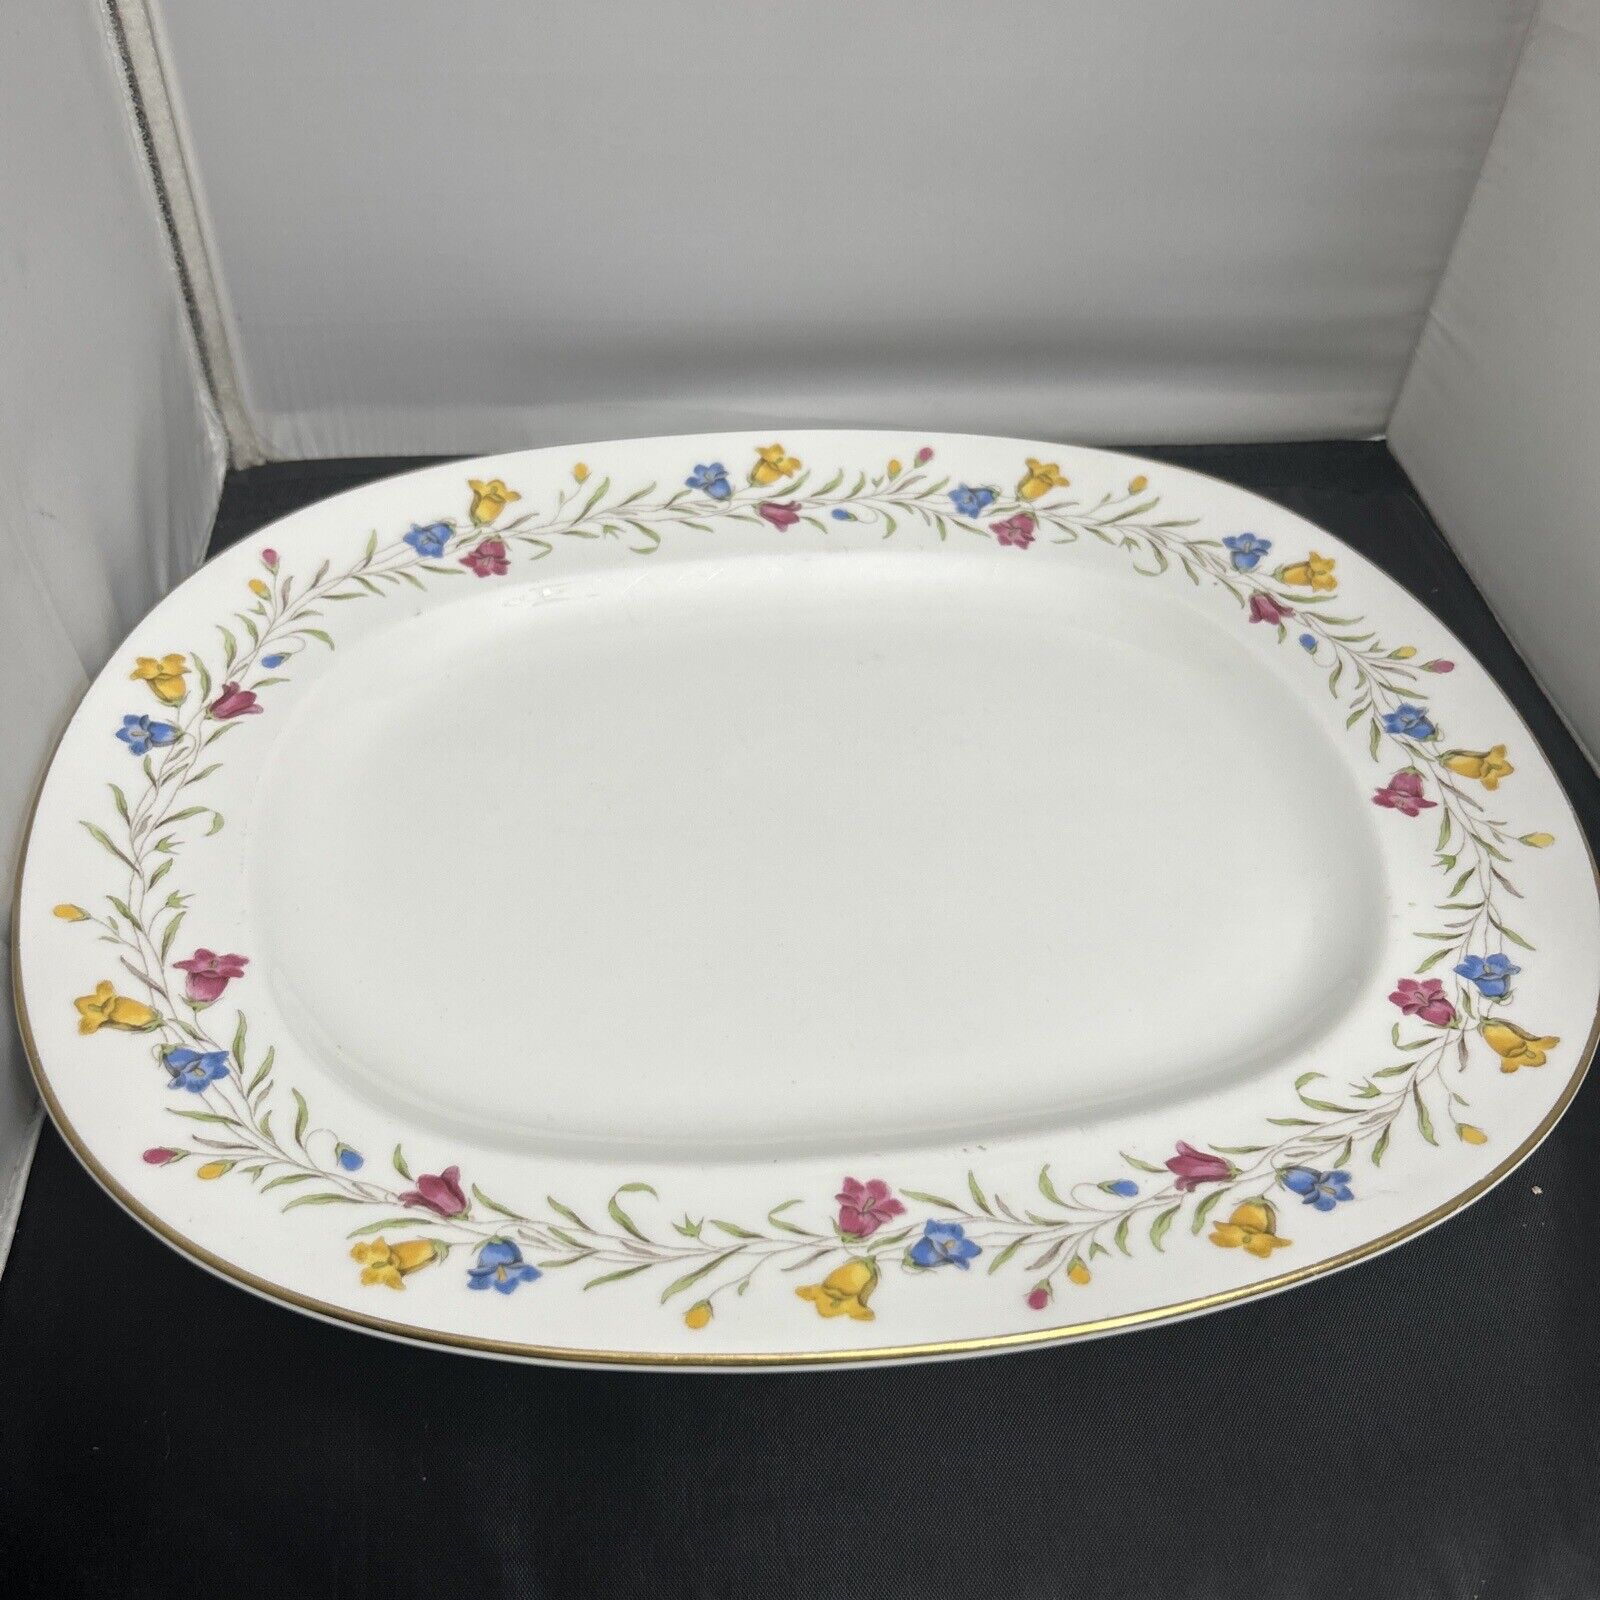 Vintage Minton England Large Serving Platter Dish 15 X 12 ￼ Floral Design 5514D